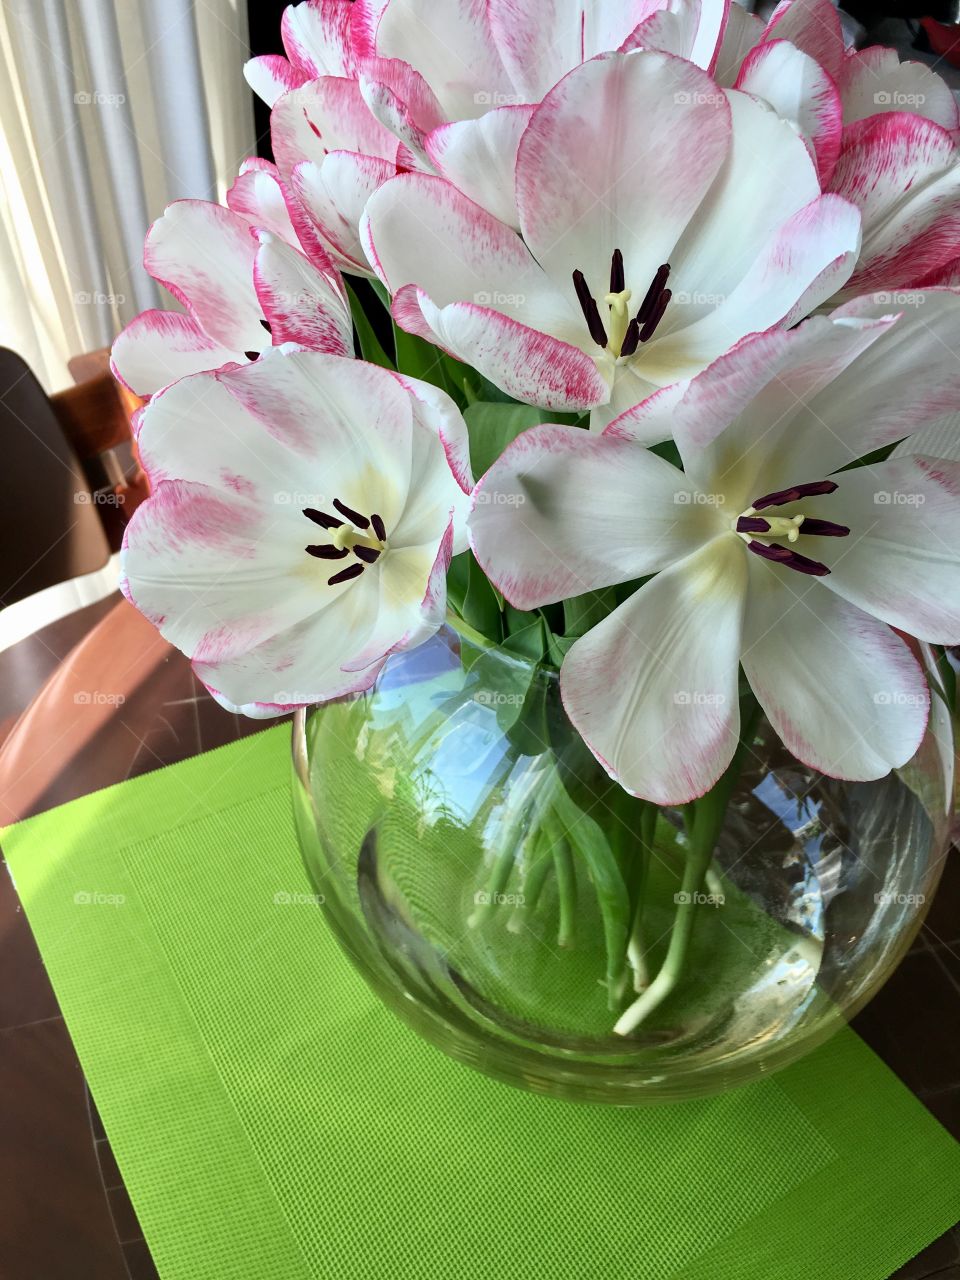 White Tulips in a vase